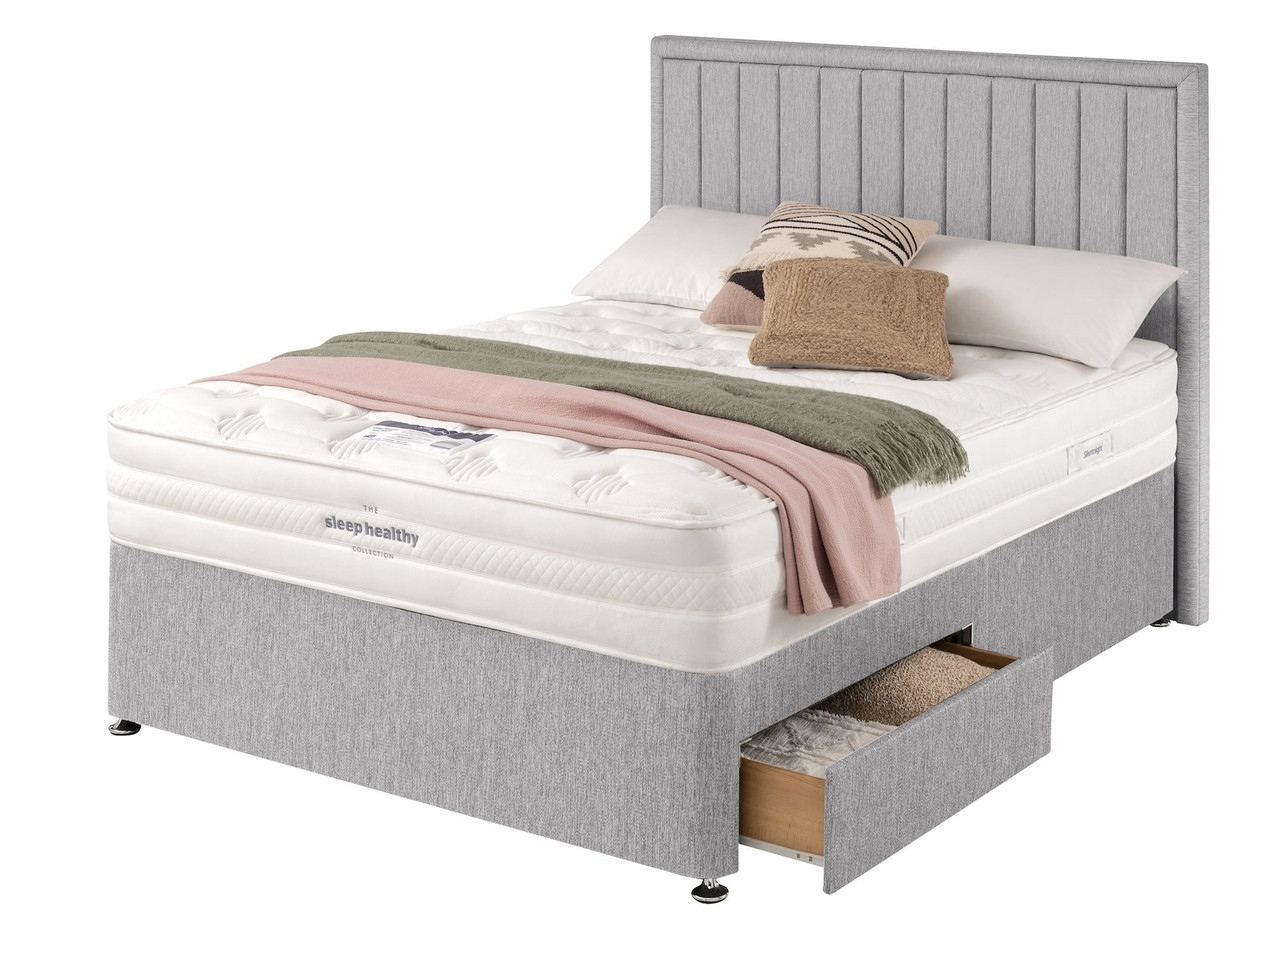 Silentnight Sleep Healthy Eco 2000 Divan Bed Set Small Double Sandpiper